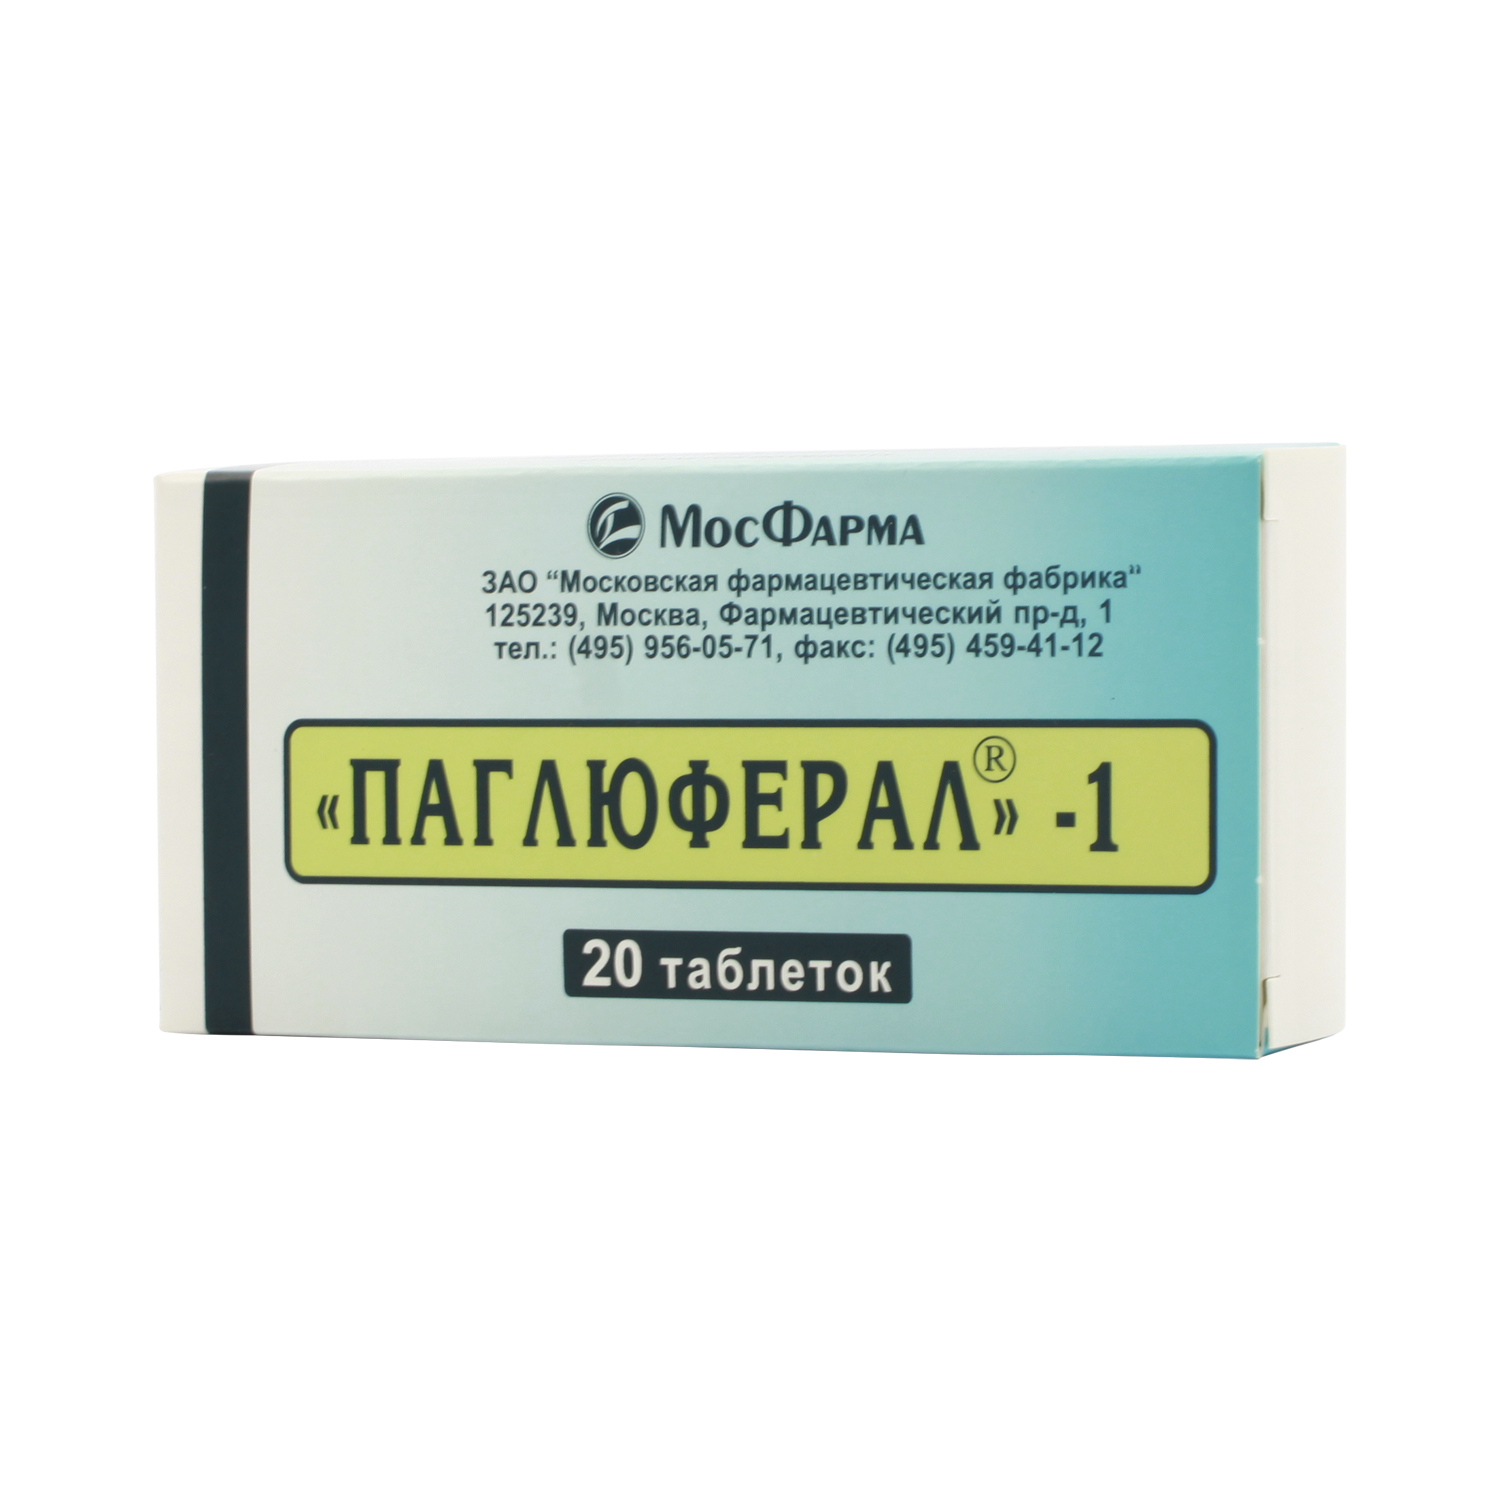 ПАГЛЮФЕРАЛ-1, таблетки